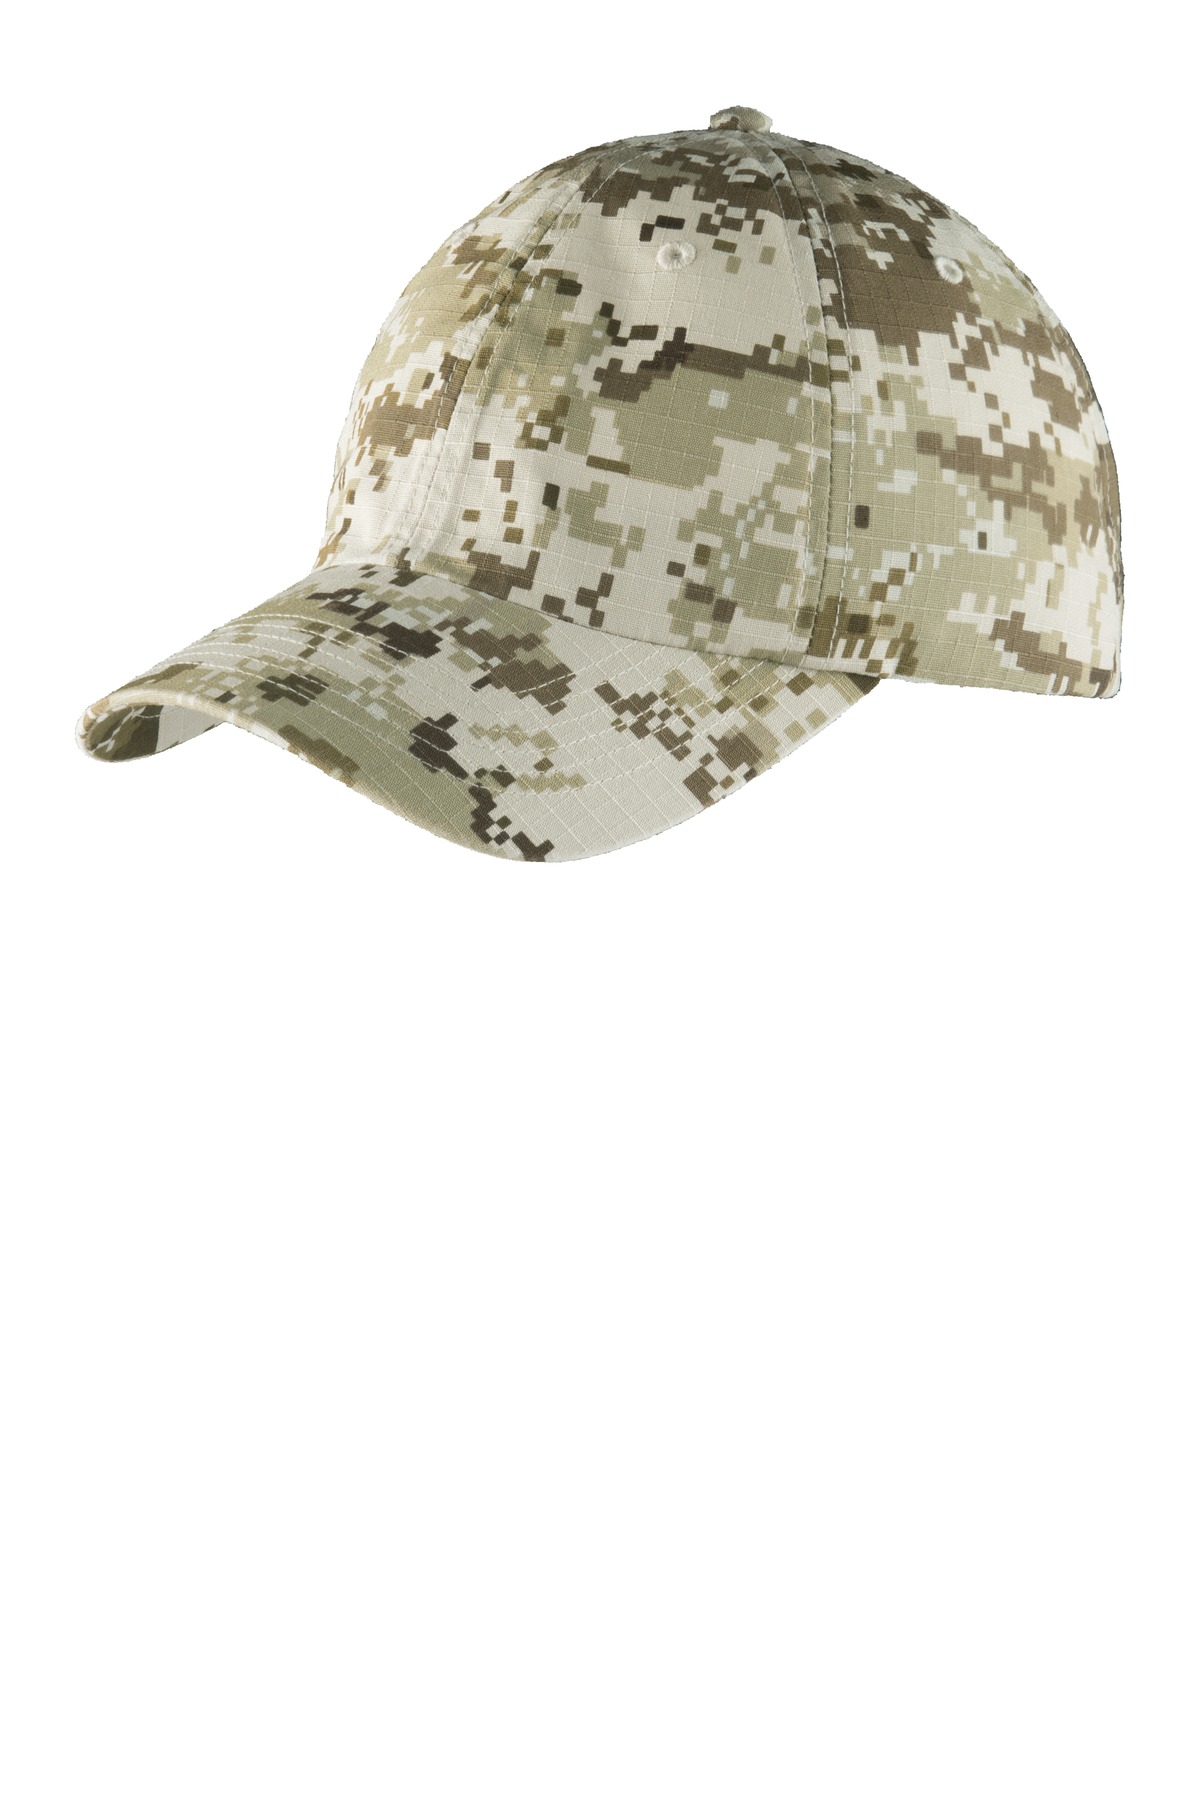 Port Authority Hospitality Caps ® Digital Ripstop Camouflage Cap.-Port Authority